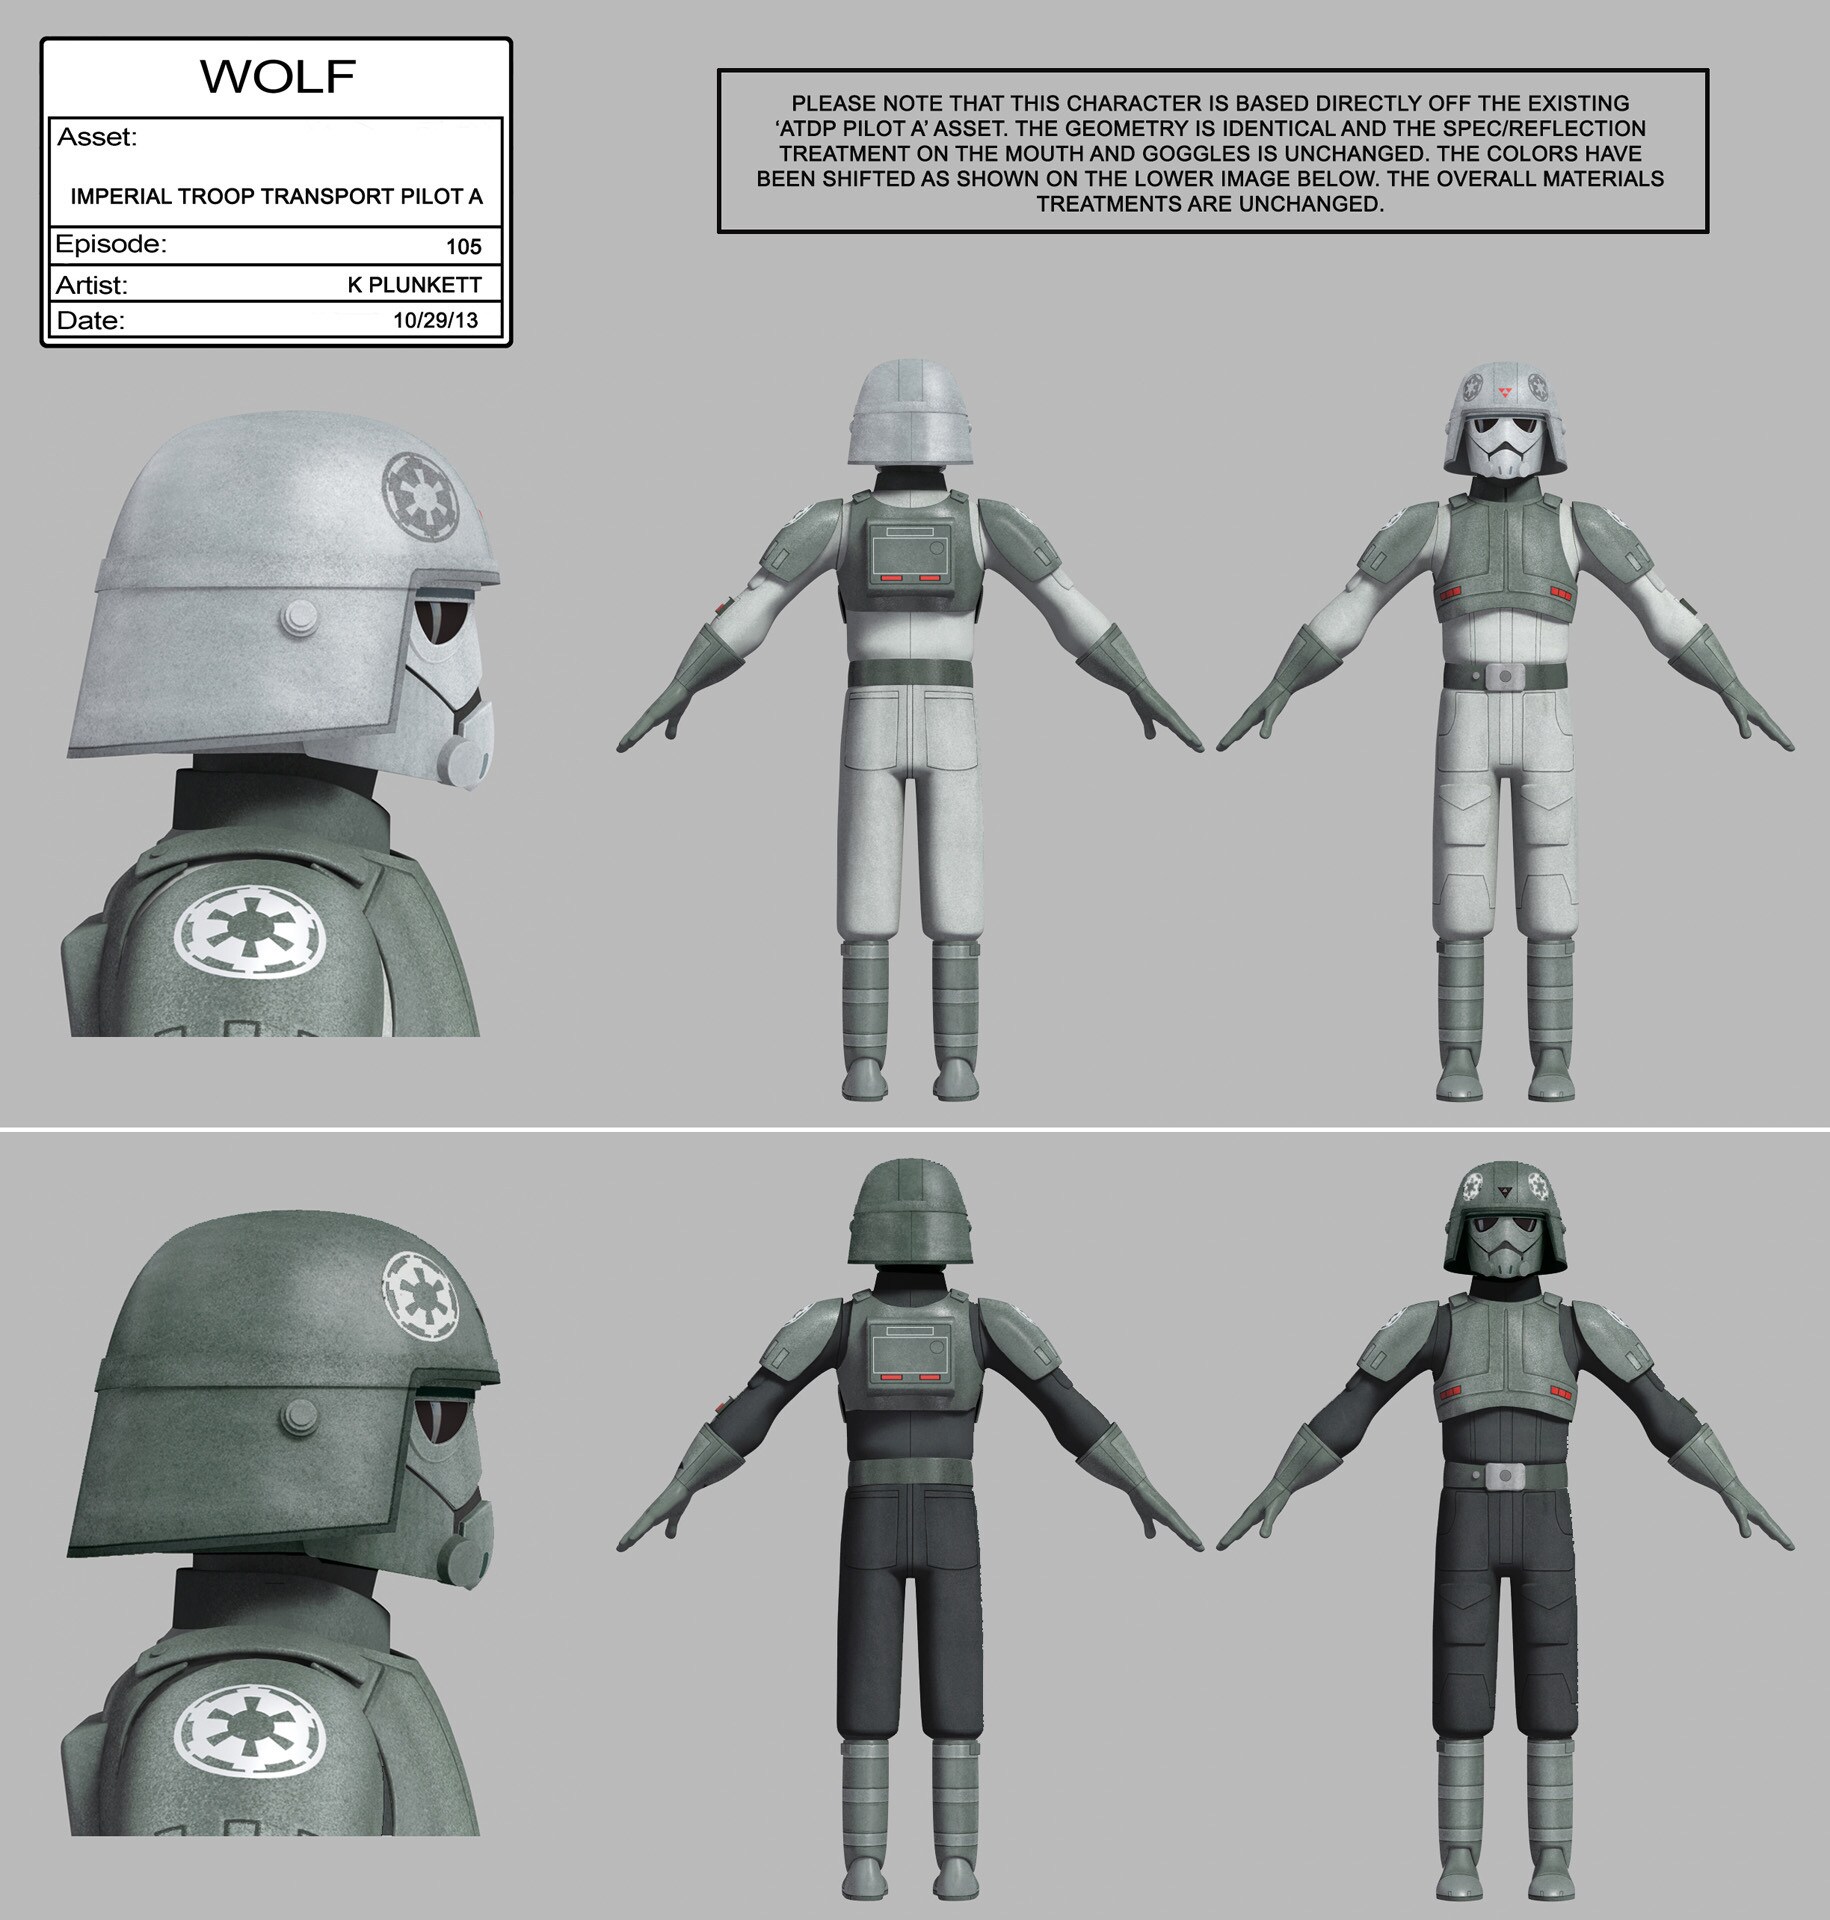 Imperial Troop Transport full character illustration by Kilian Plunkett.